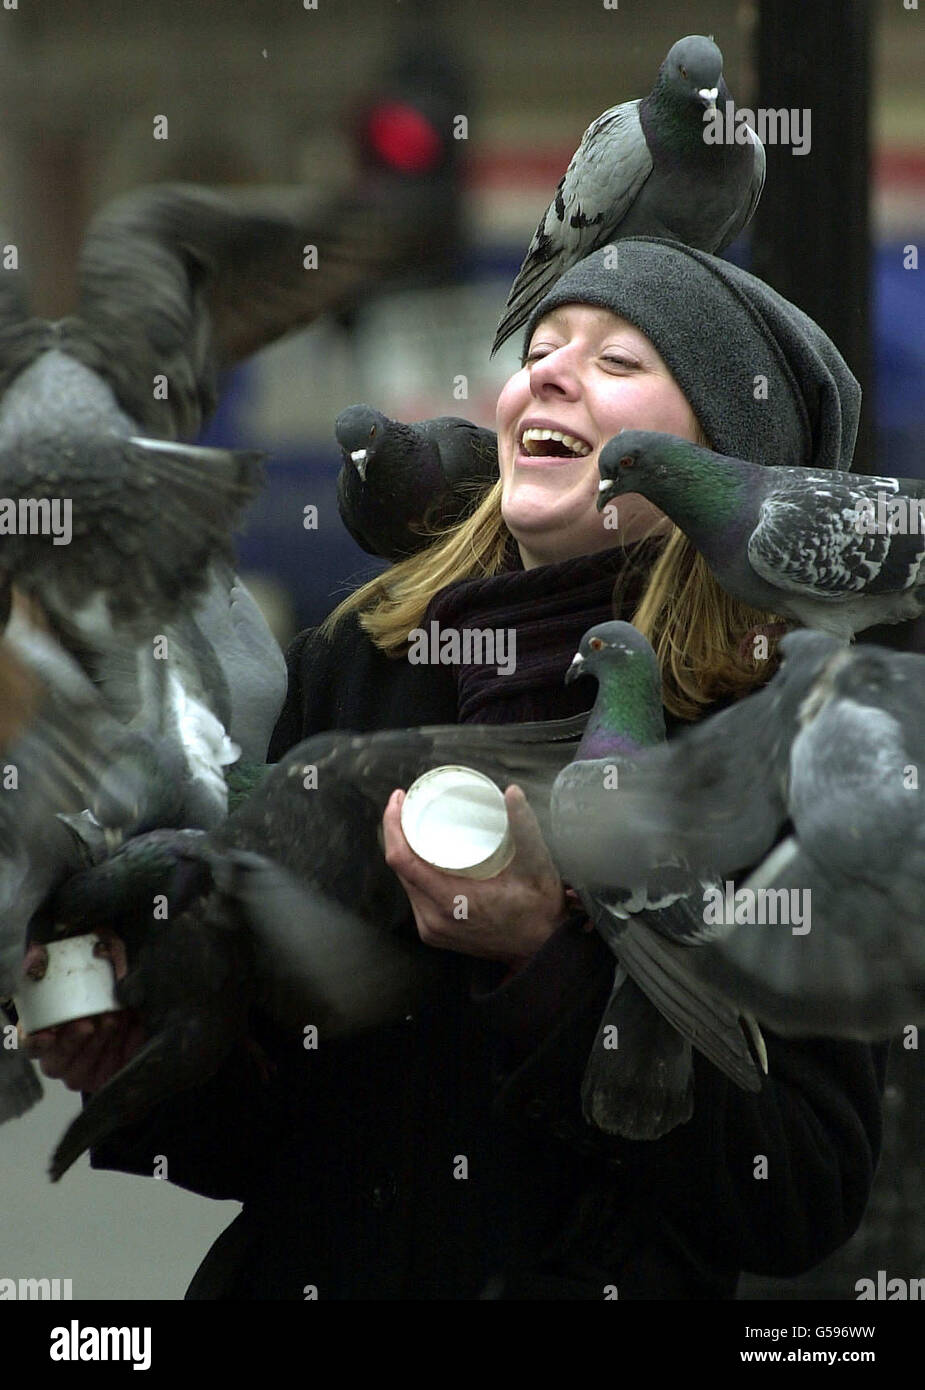 Feeding the pigeons Stock Photo